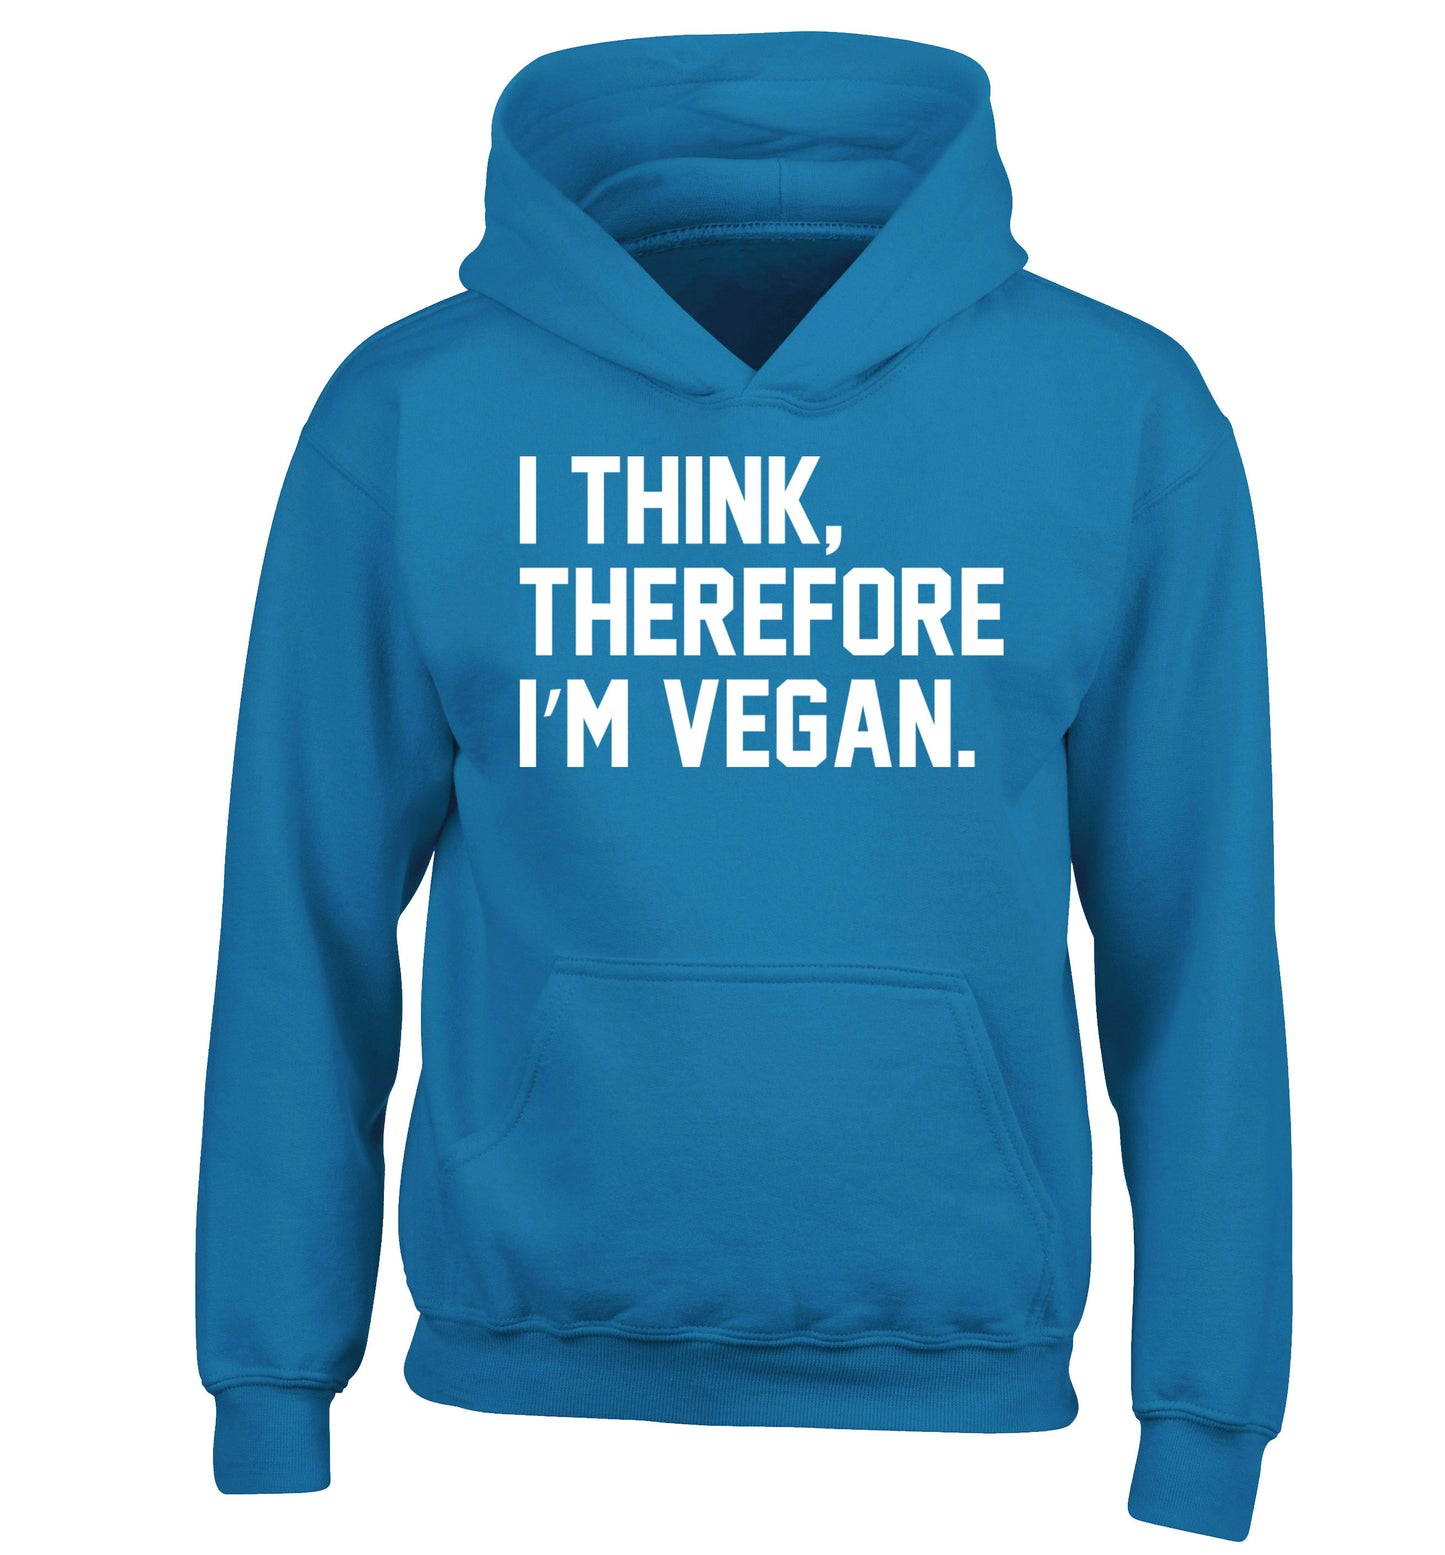 I think therefore I'm vegan children's blue hoodie 12-14 Years